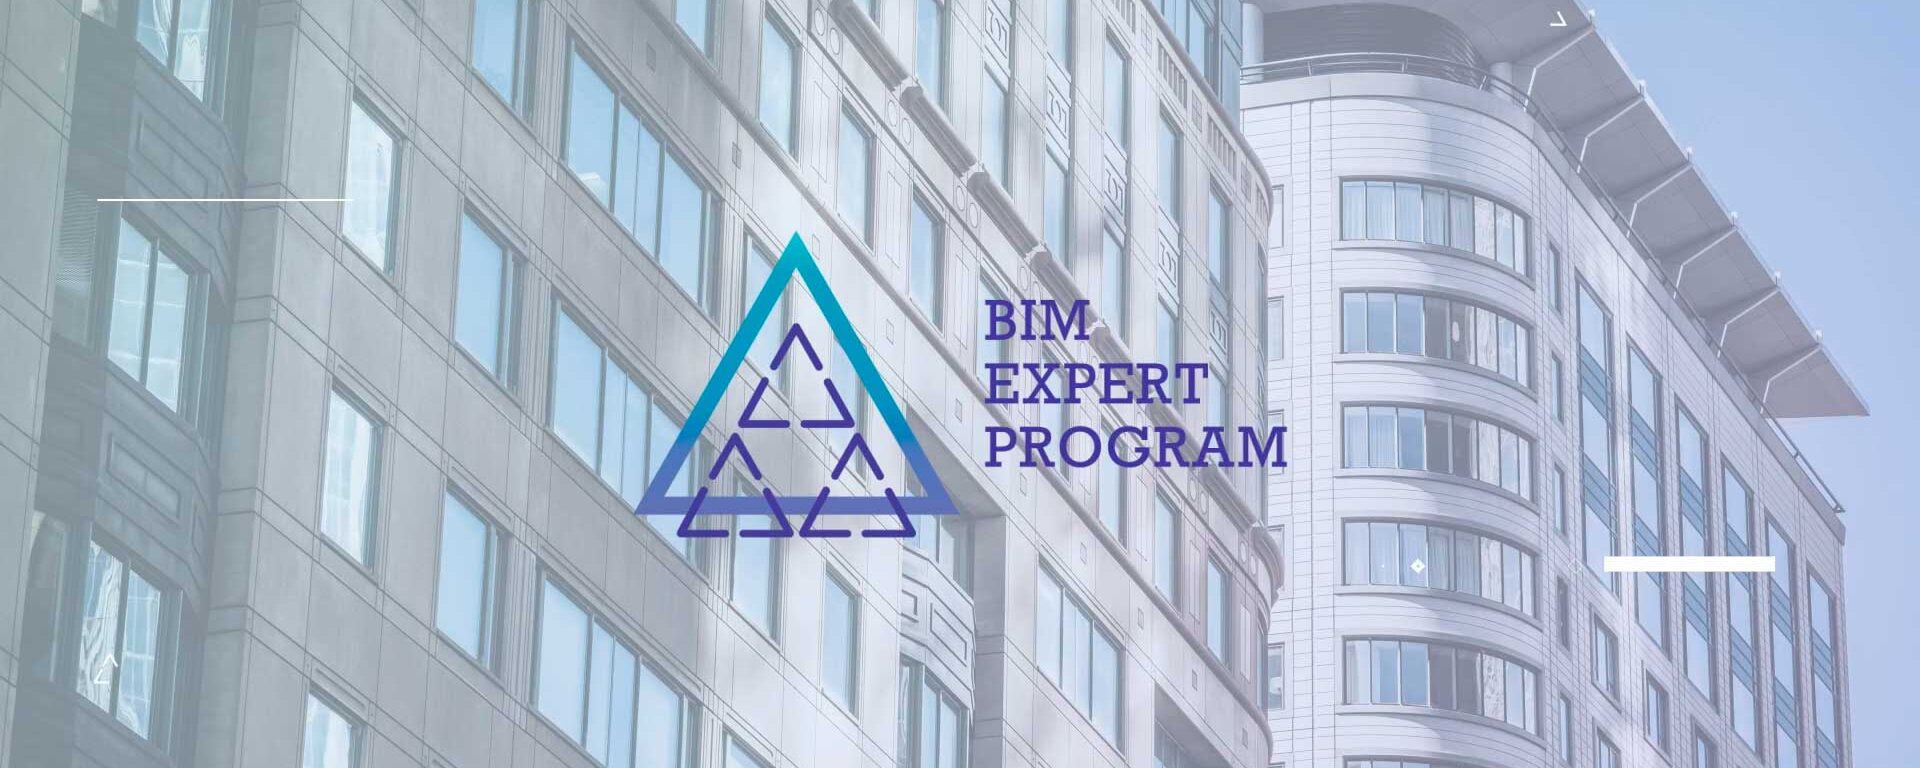 BIM Expert Program